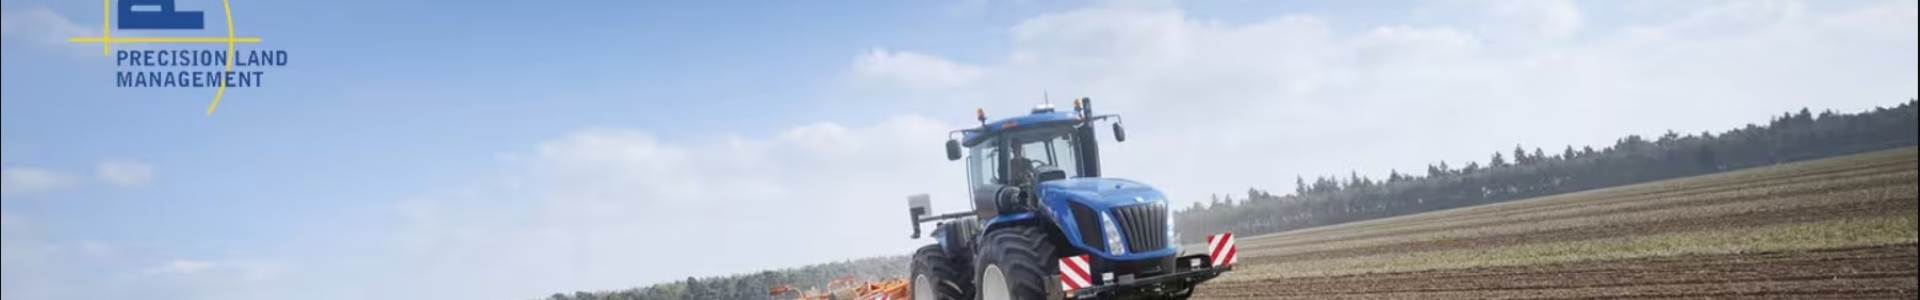 gps systeem tractor precisielandbouw